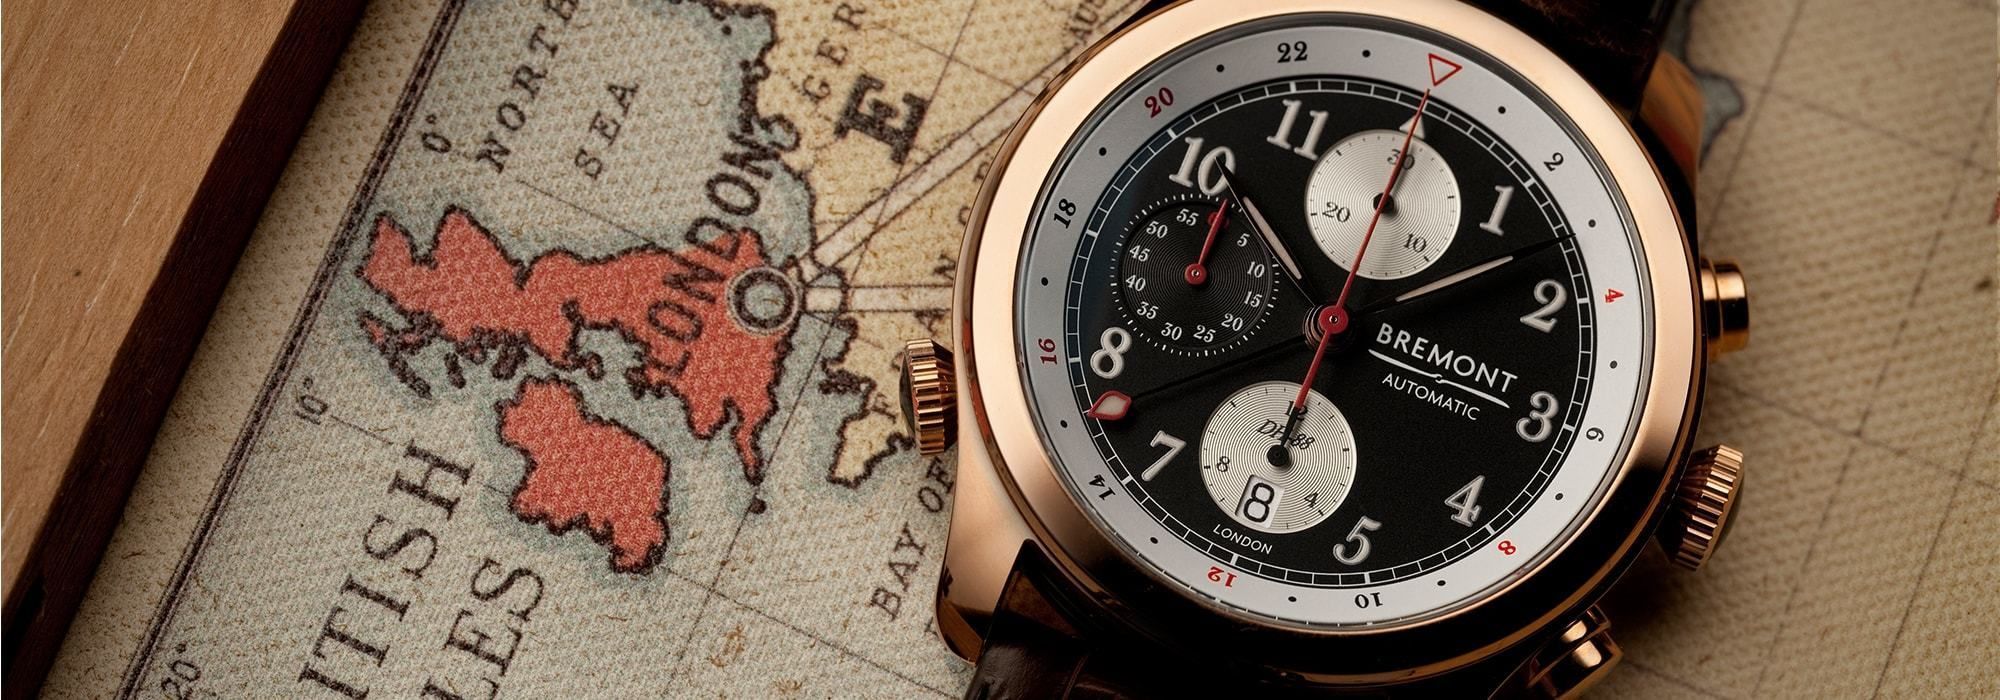 Bremont Watches  Luxury British Watches & Chronometers – Bremont